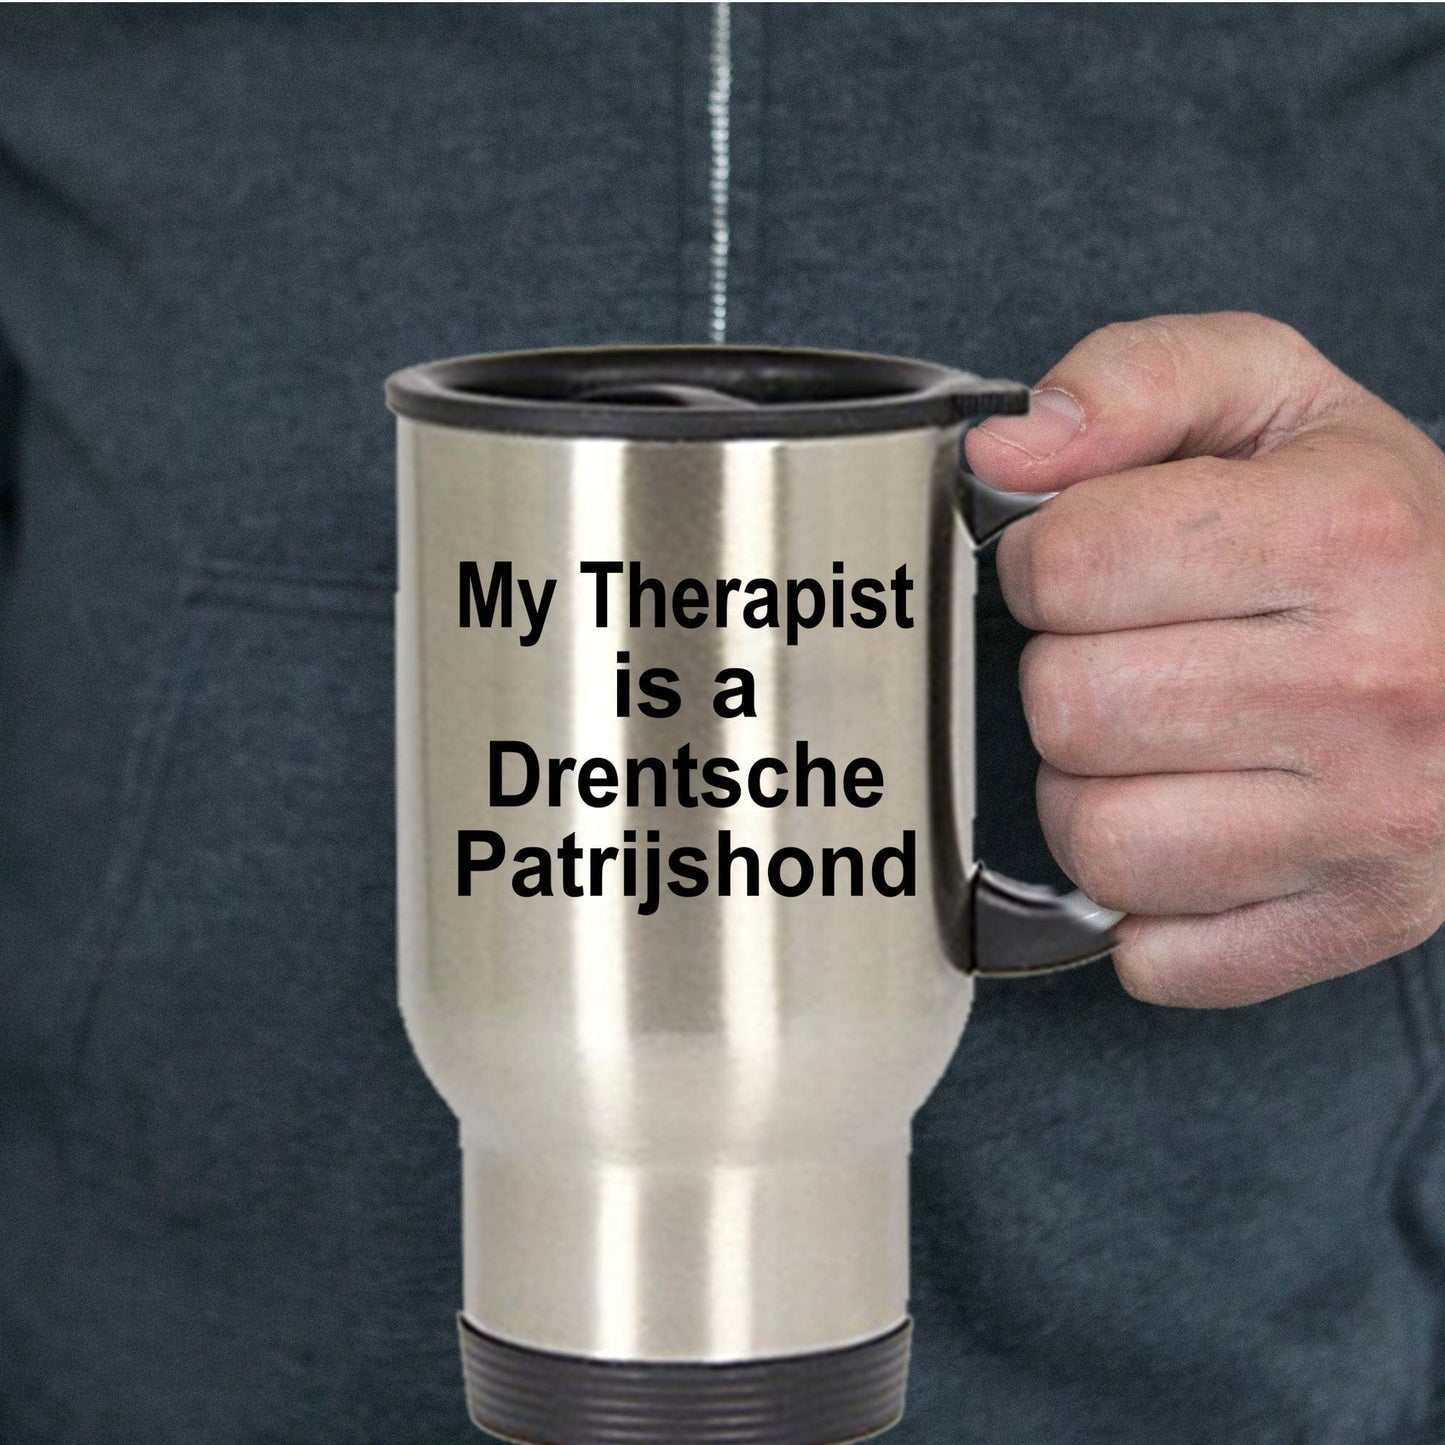 Drentsche Patrijshond Dog Therapist Travel Coffee Mug